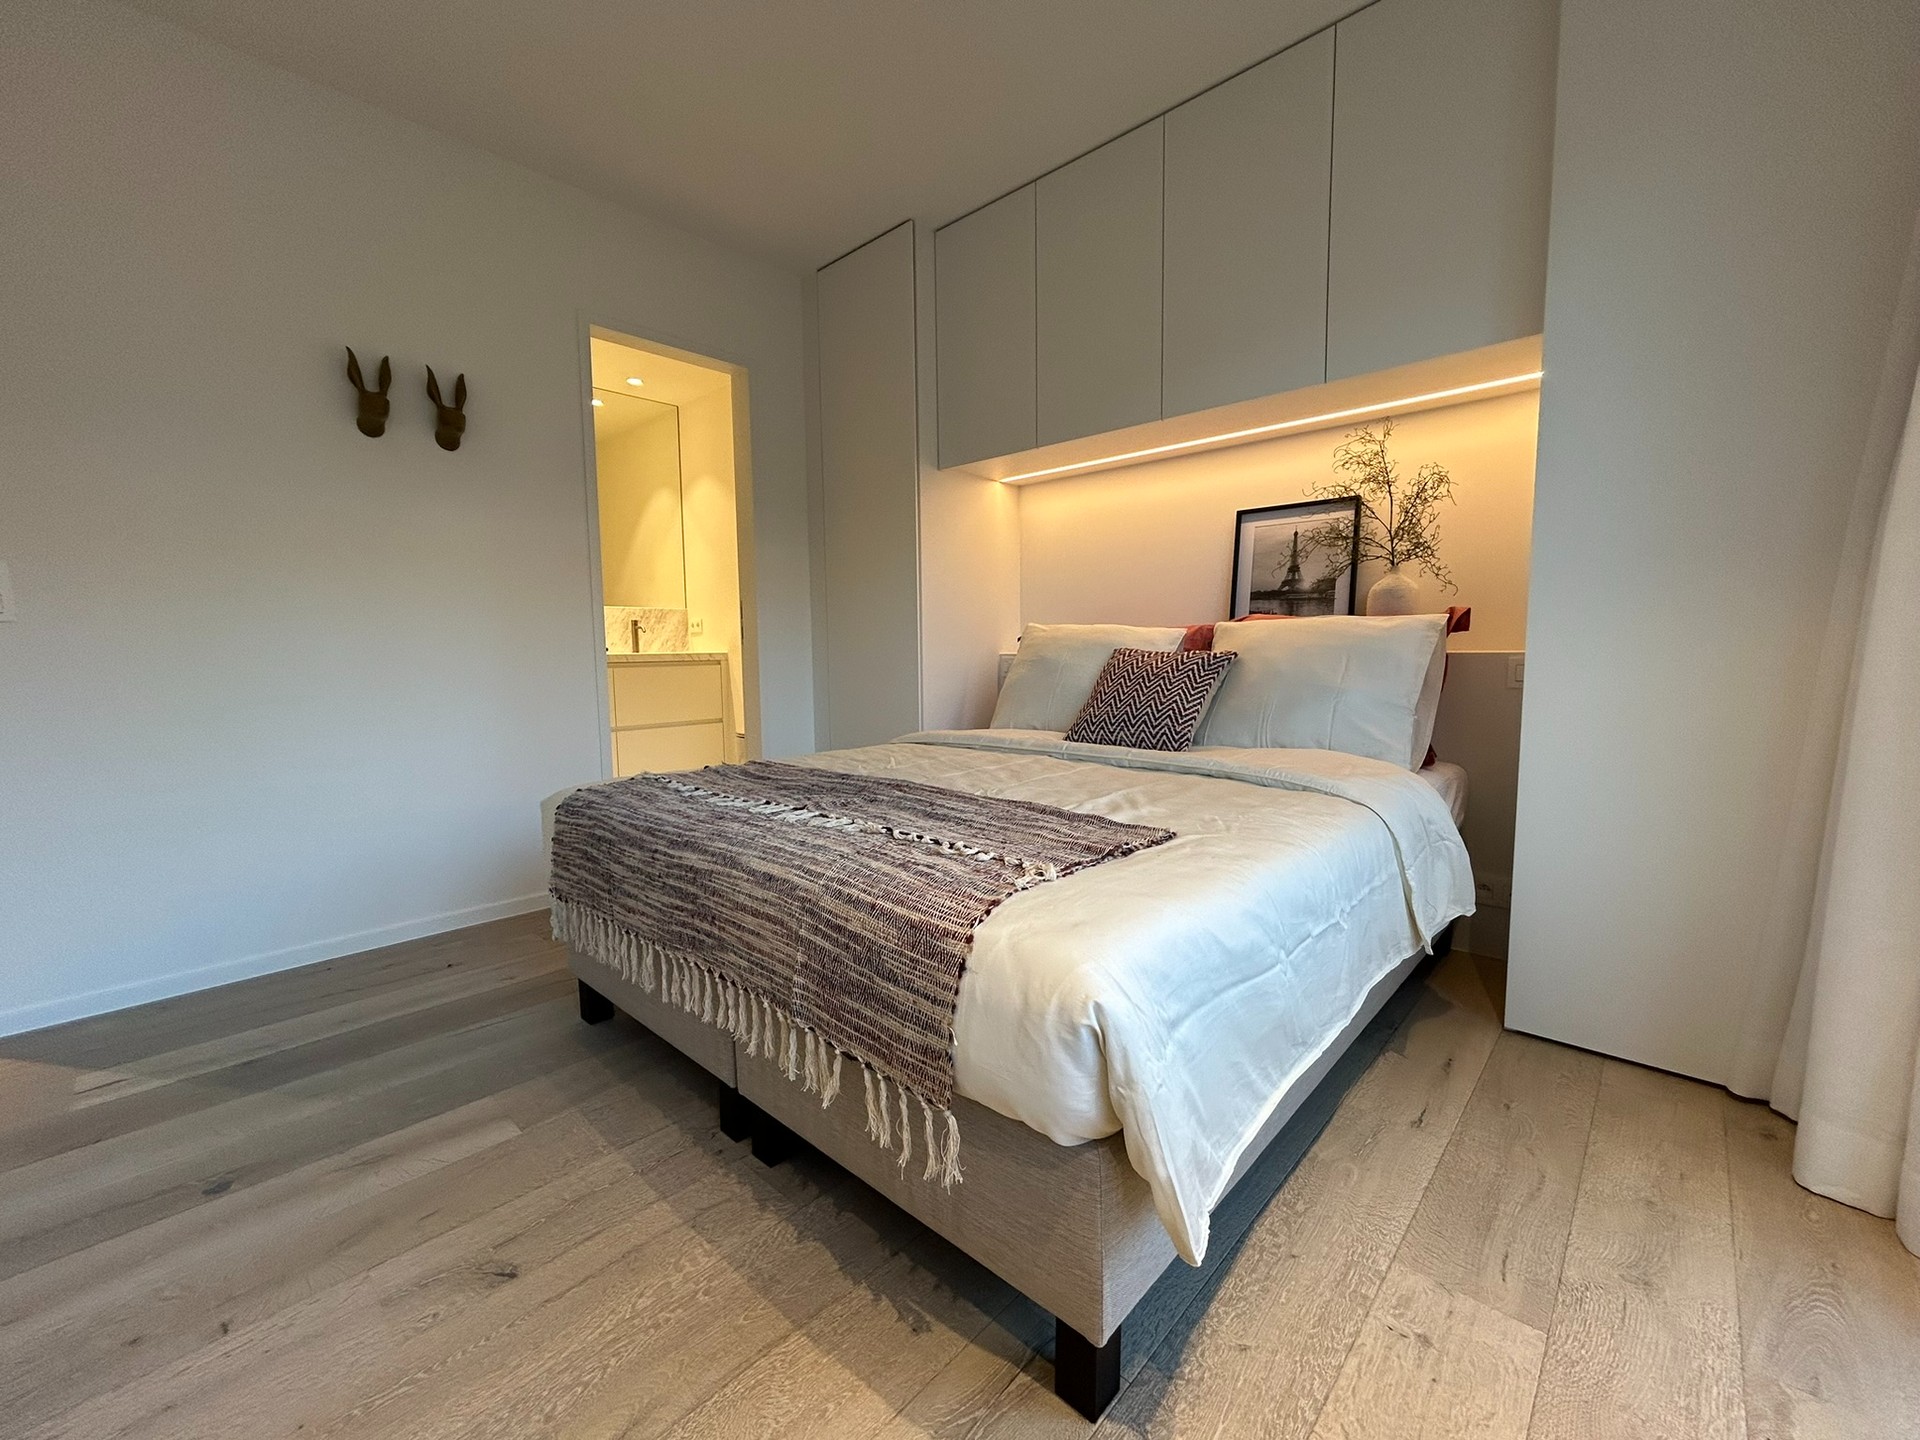 Gerenoveerd appartement met drie slaapkamers te Knokke - centrum foto 11